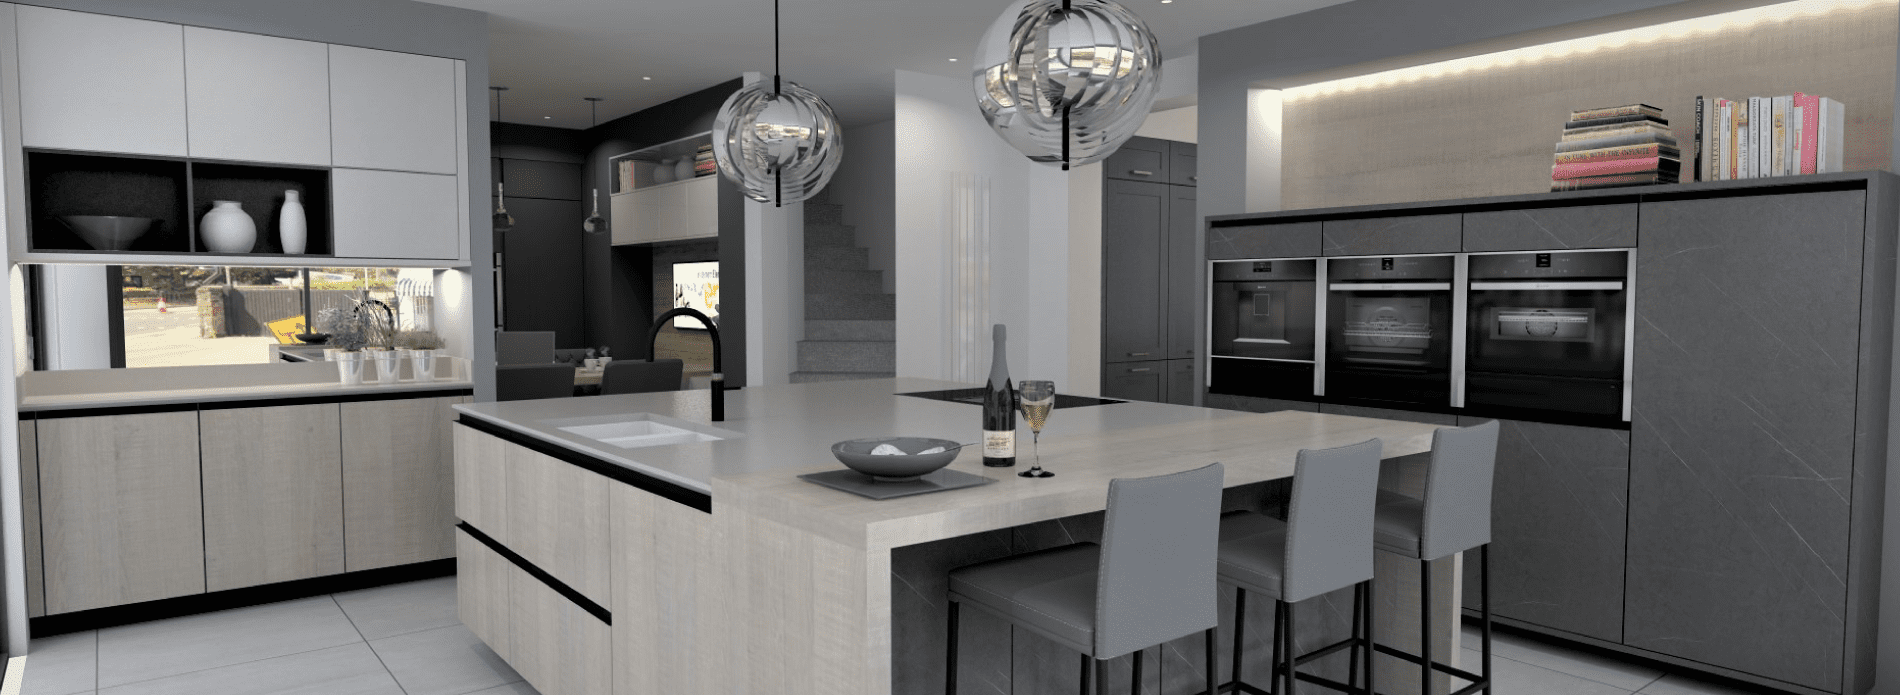 Our Favourite Luxury Kitchen Design Trends For 2020 Kitchen